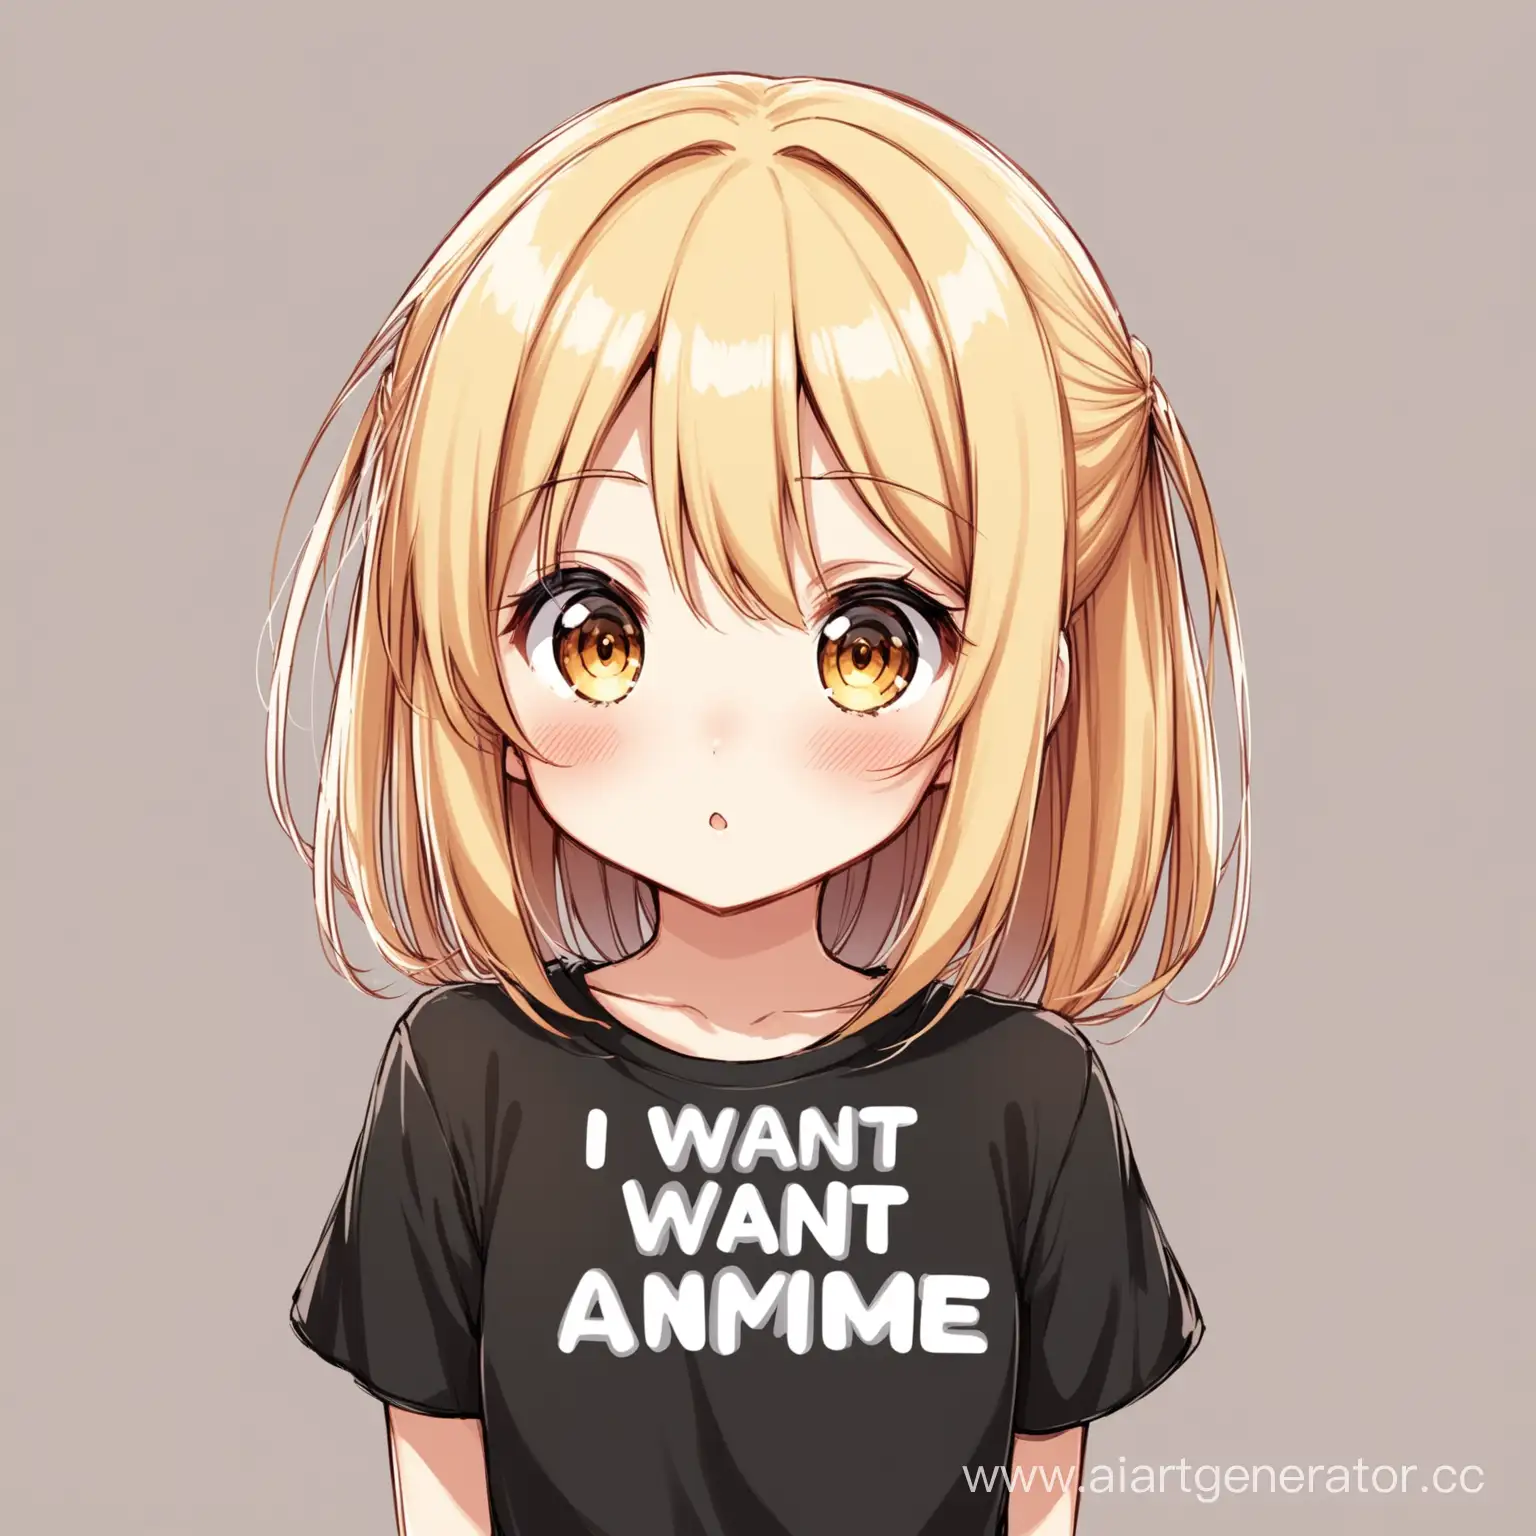 создай картинку на фразу "хочу аниме" без фона и без текста
